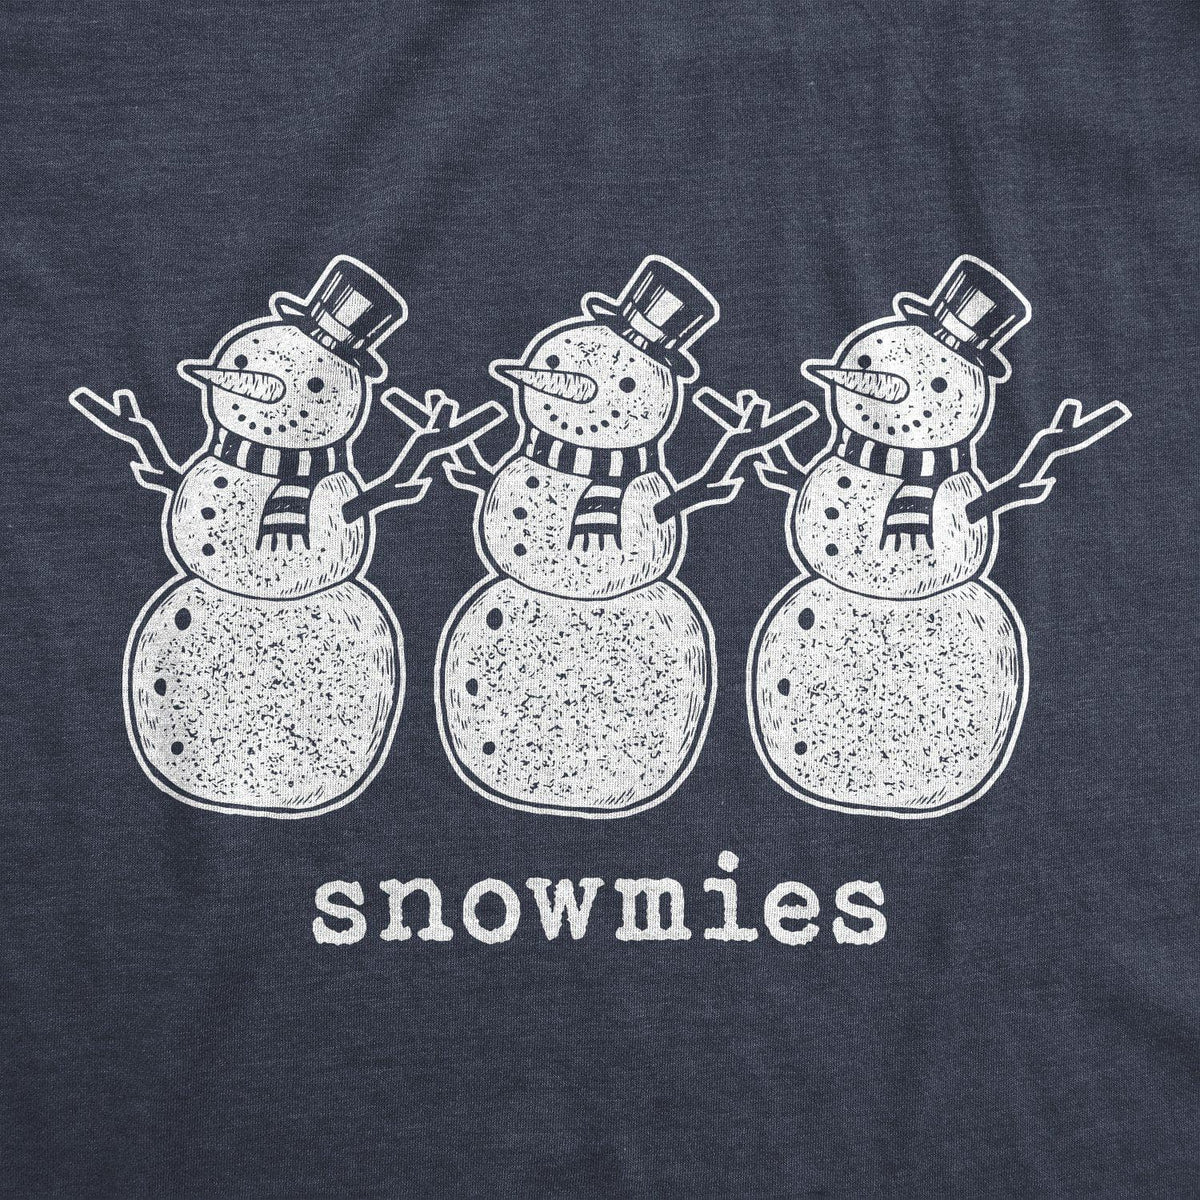 Snowmies Men&#39;s Tshirt - Crazy Dog T-Shirts